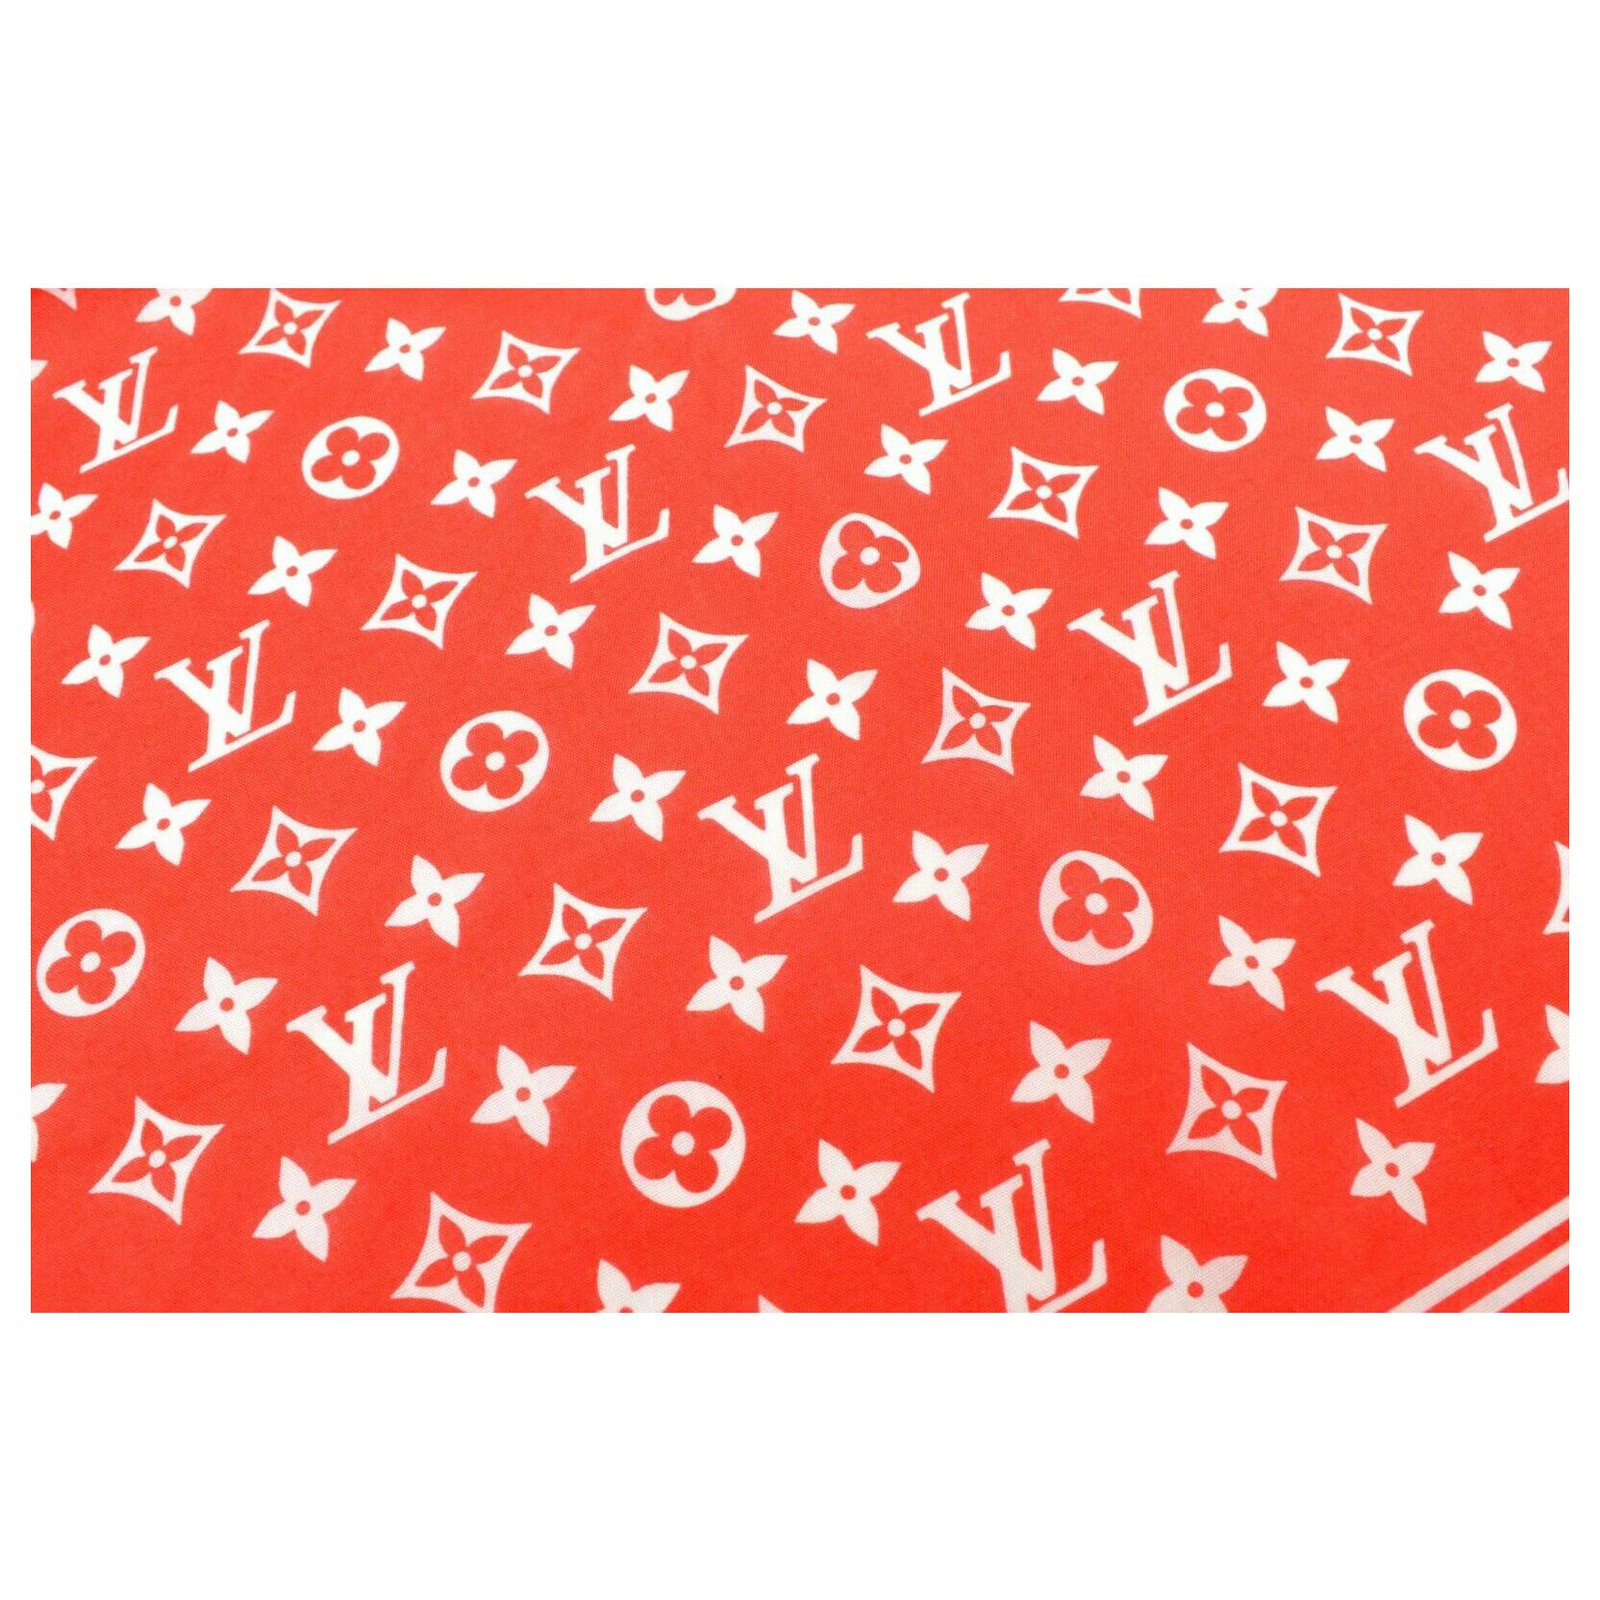 supreme monogram scarf red